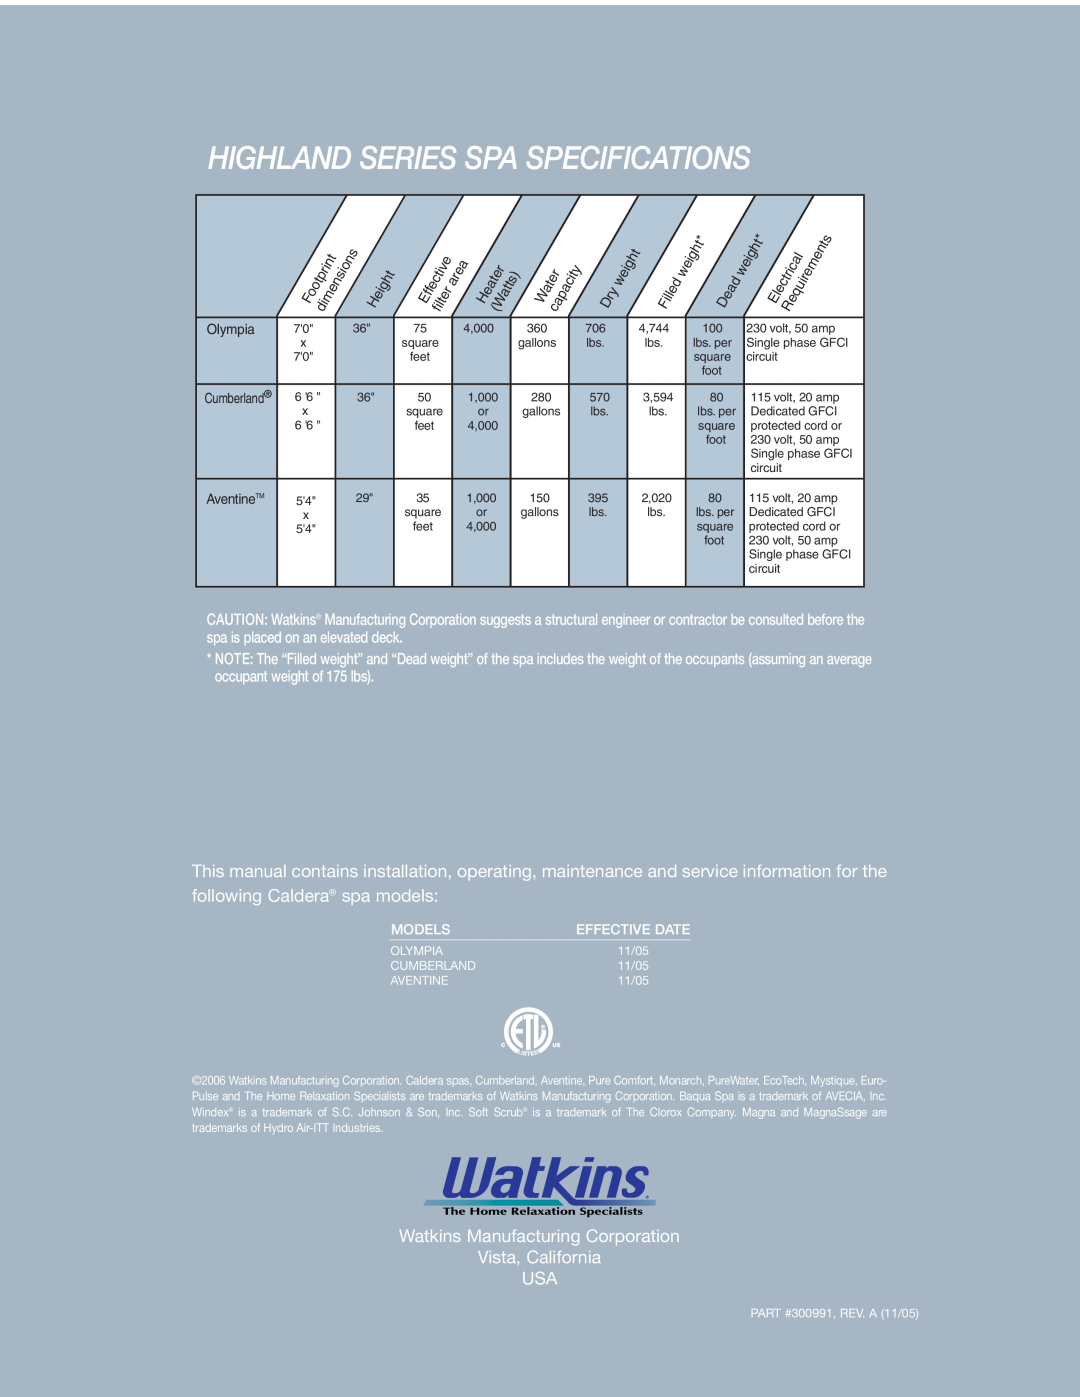 Caldera owner manual Highland Series Spa Specifications, Watkins Manufacturing Corporation Vista, California USA 